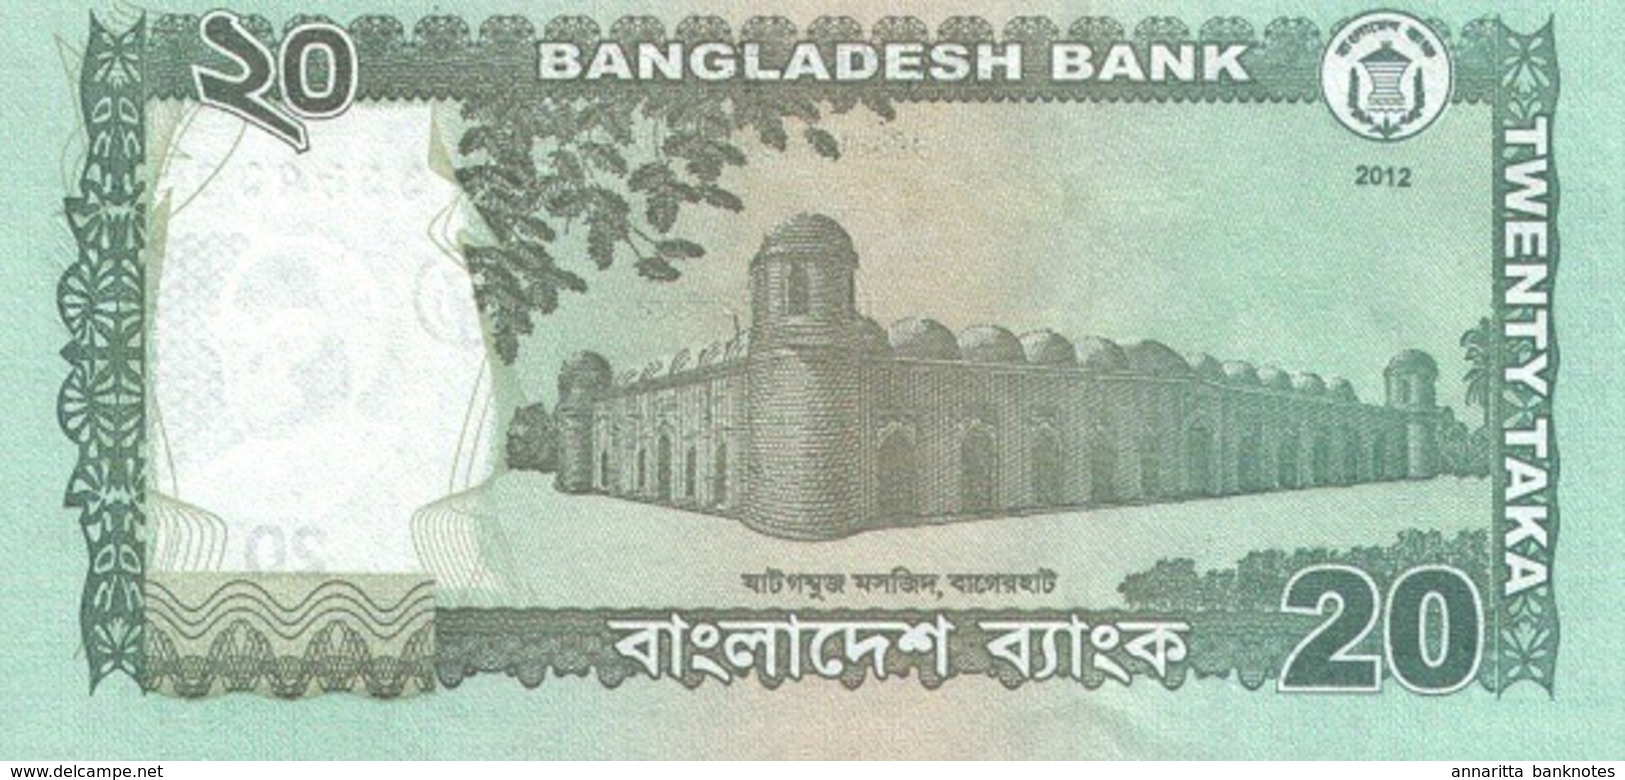 BANGLADESH 20 TAKA 2012 P-55b UNC GREEN LATHEWORK DESIGN AT RIGHT ON FRONT [BD350b] - Bangladesh